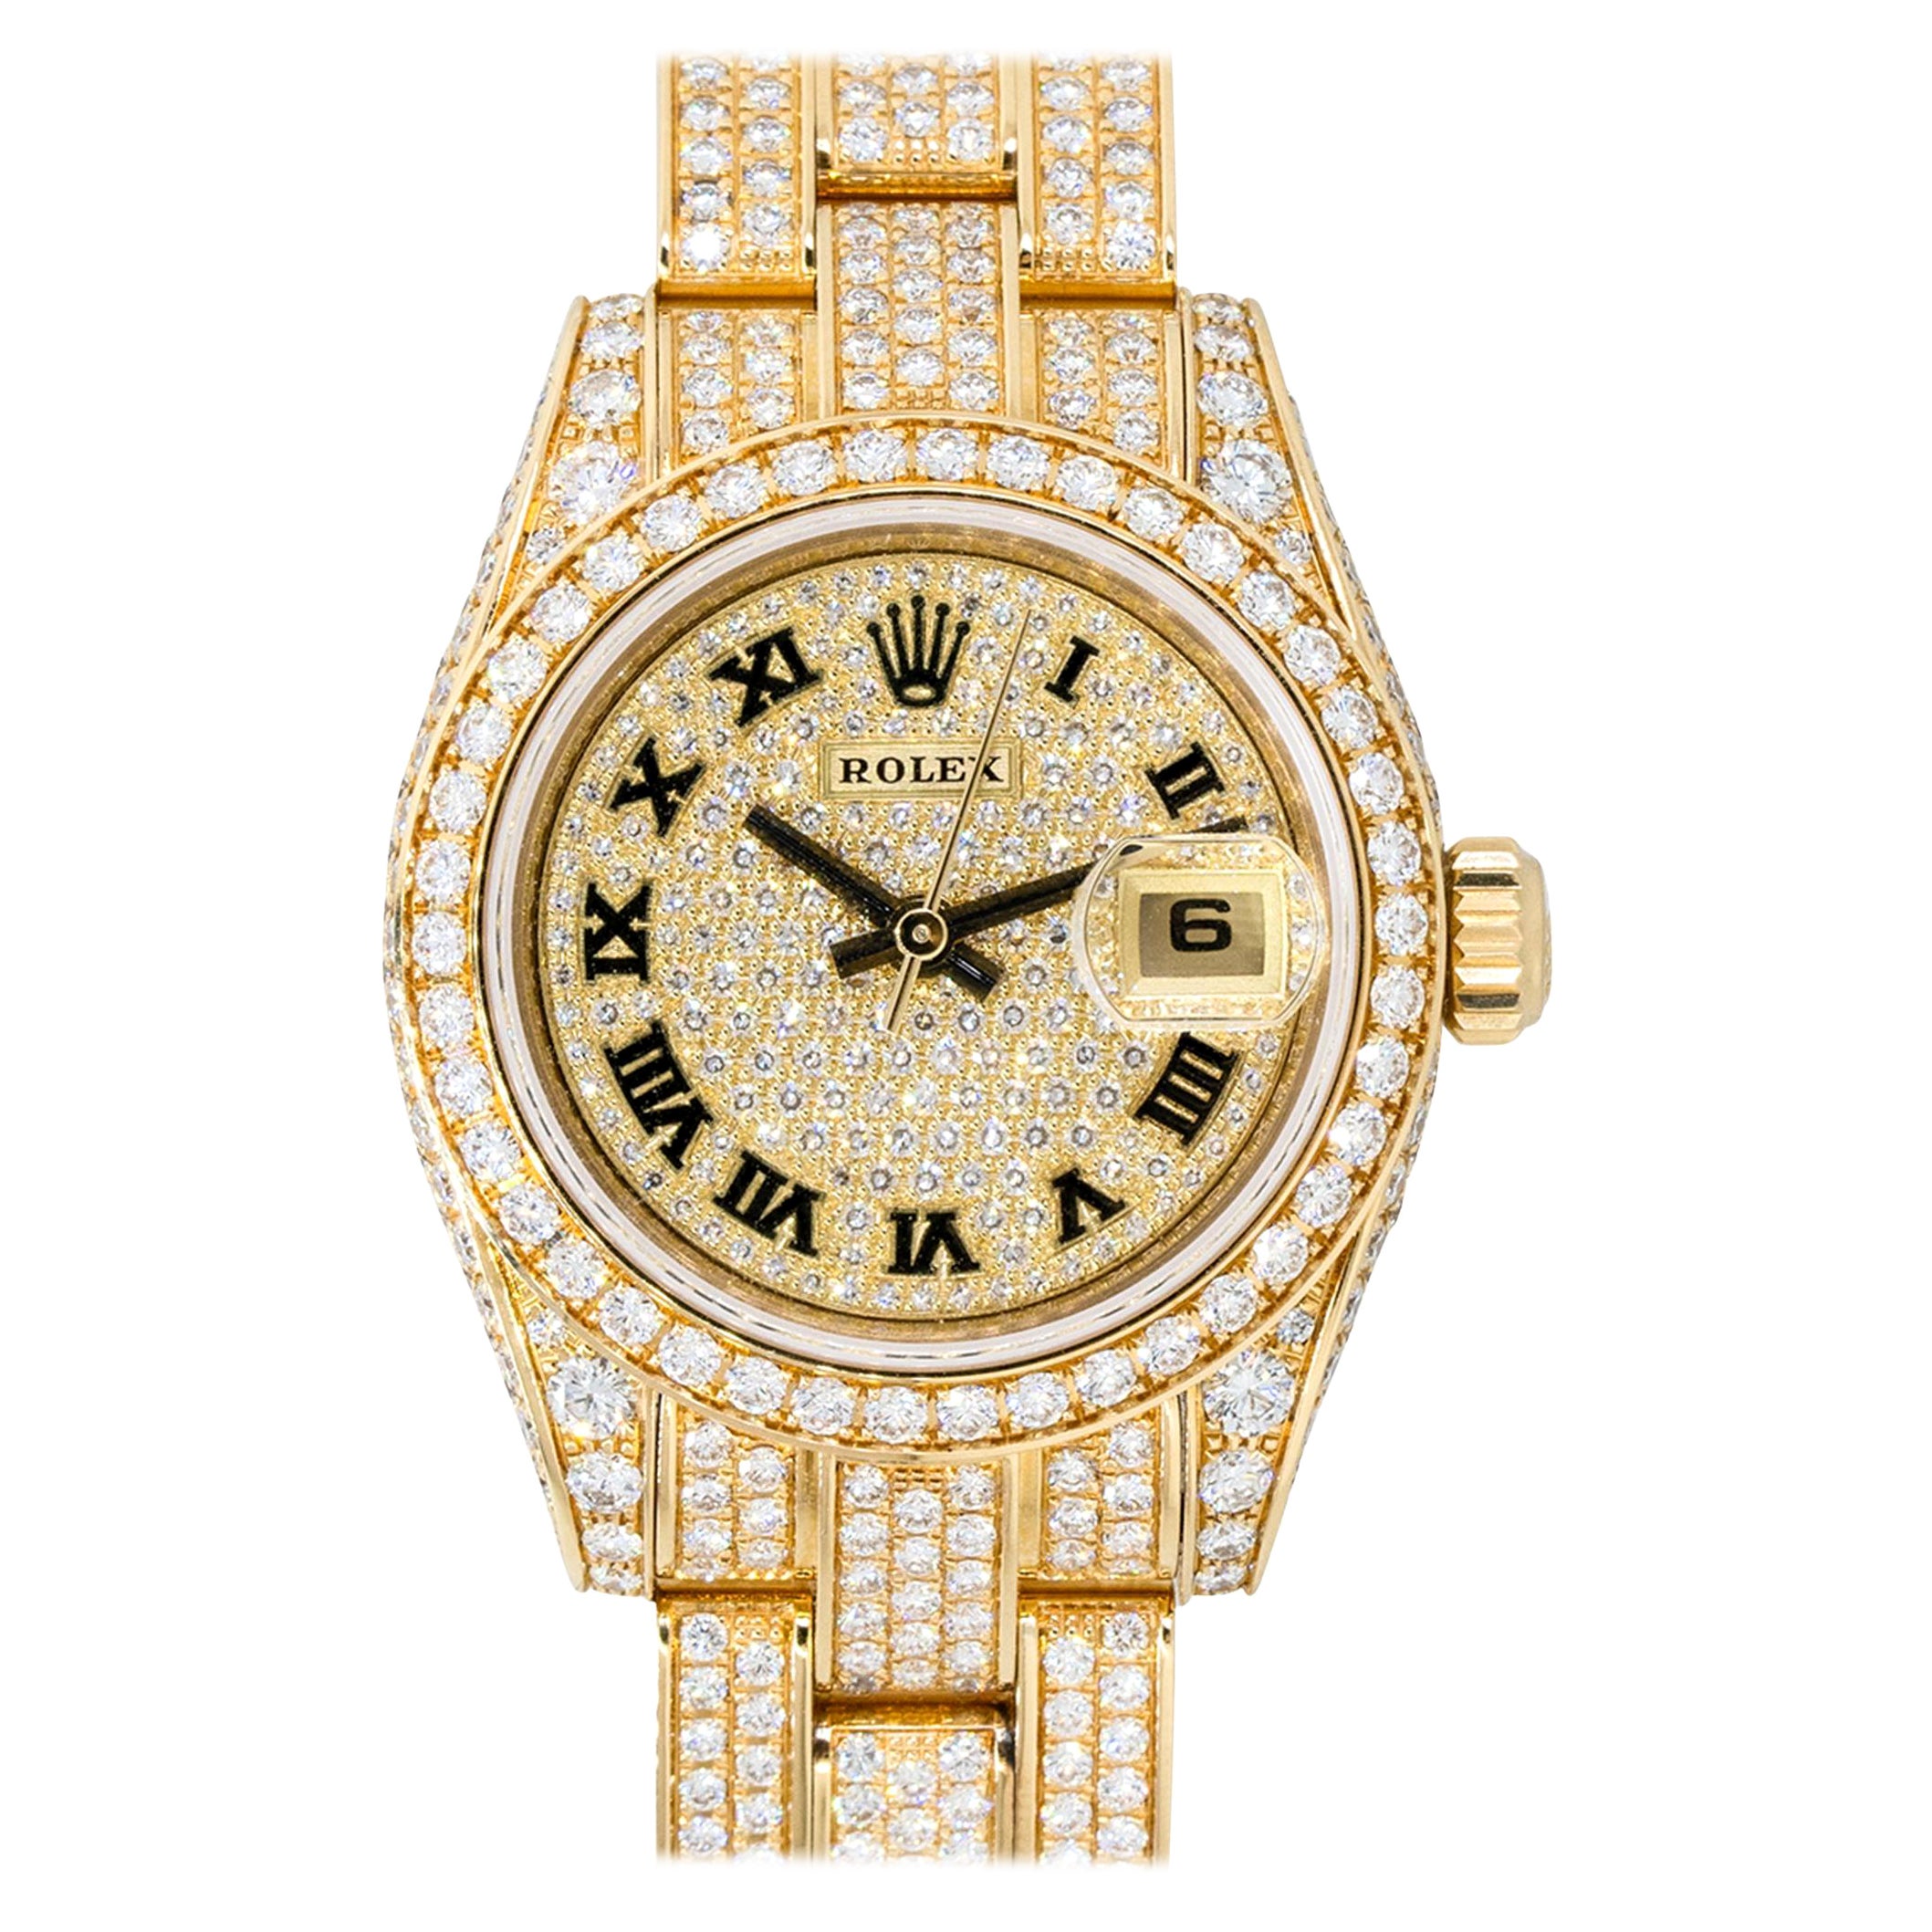 Rolex 179458 Datejust All Factory Diamond Watch 18 Karat in Stock